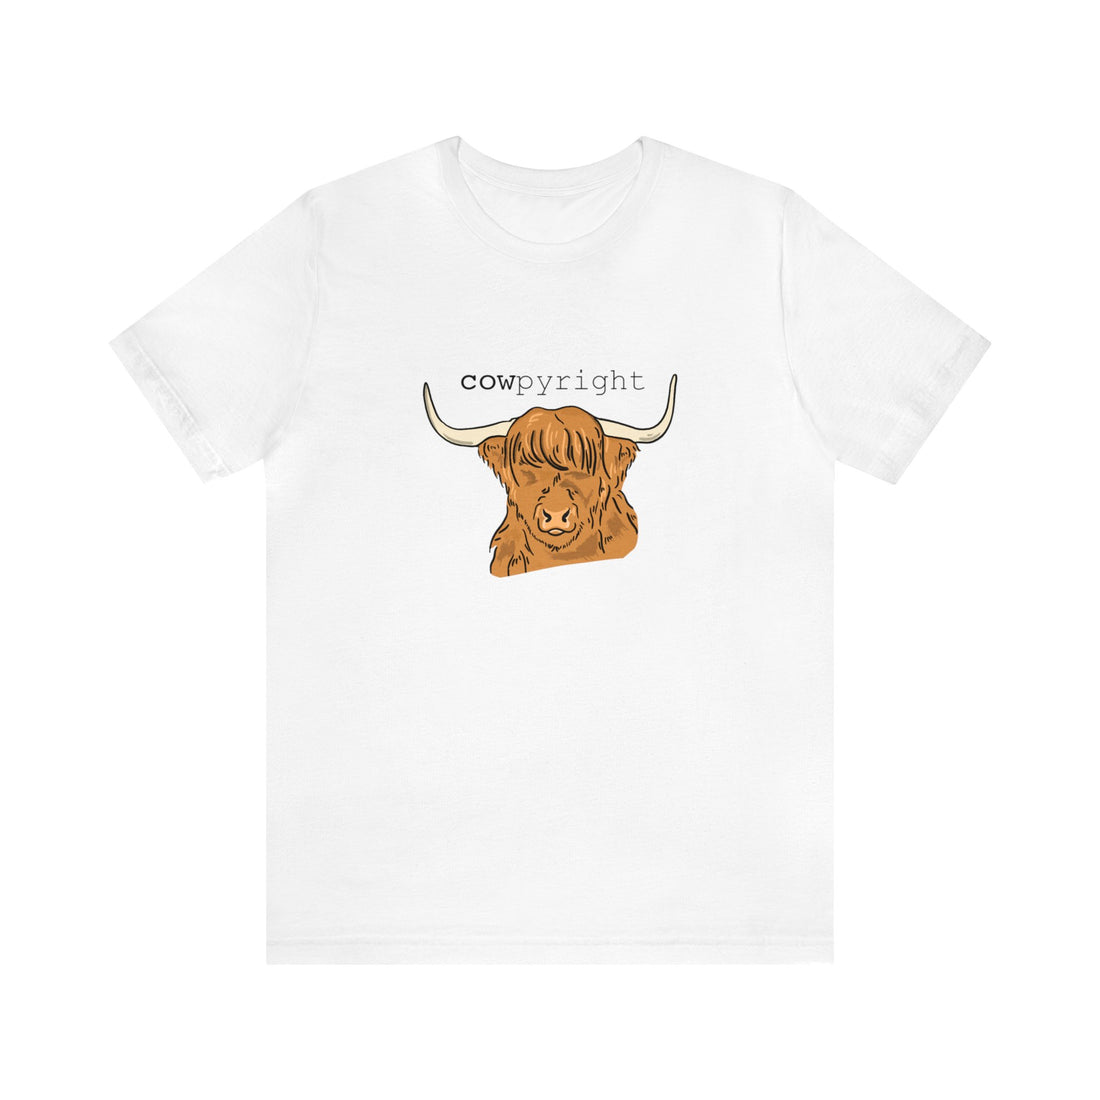 Cowpyright / T-shirt